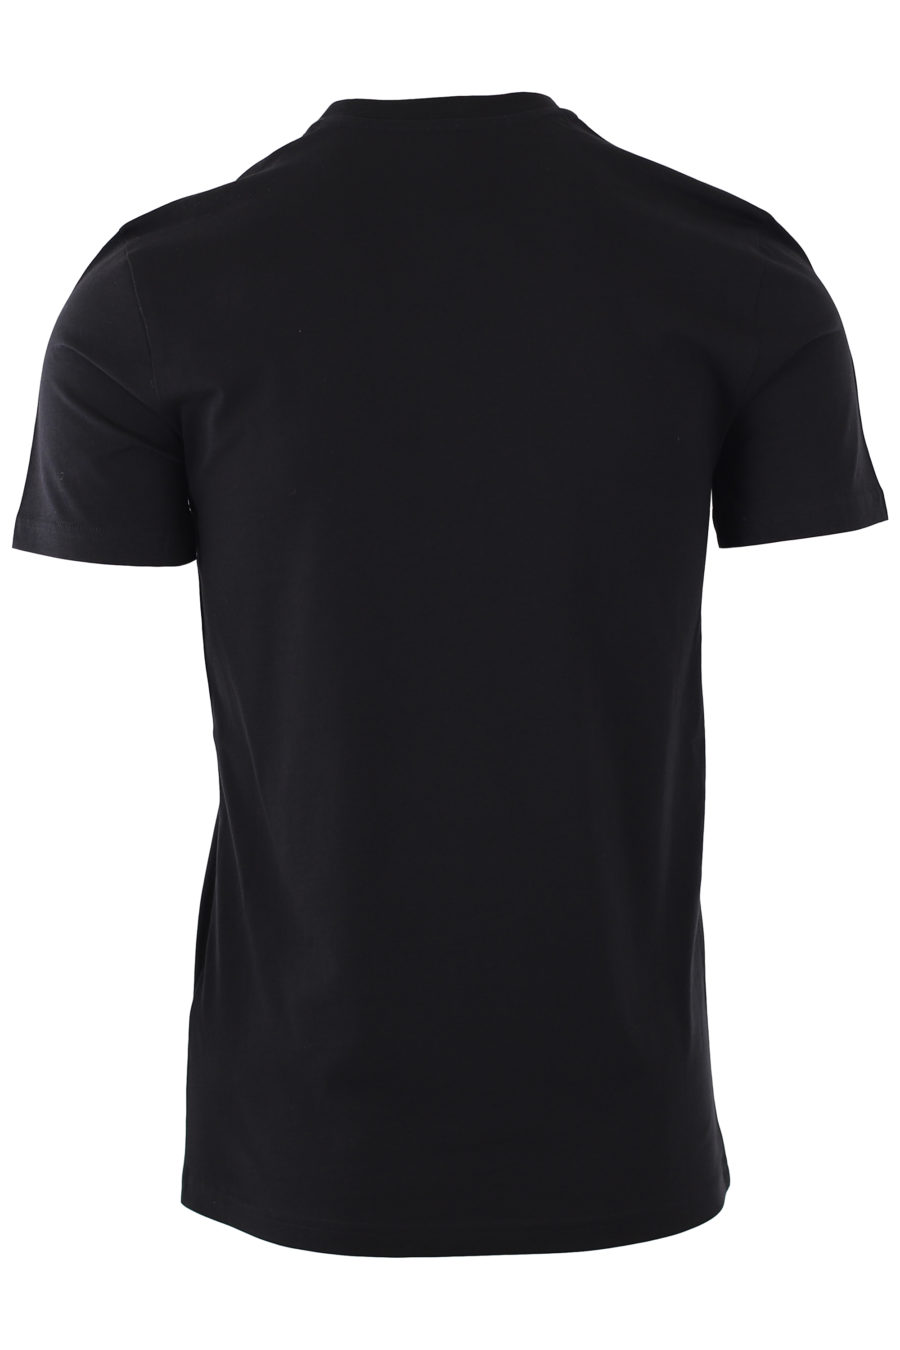 Schwarzes T-Shirt mit weißem "Fantasy"-Logo - IMG 9288